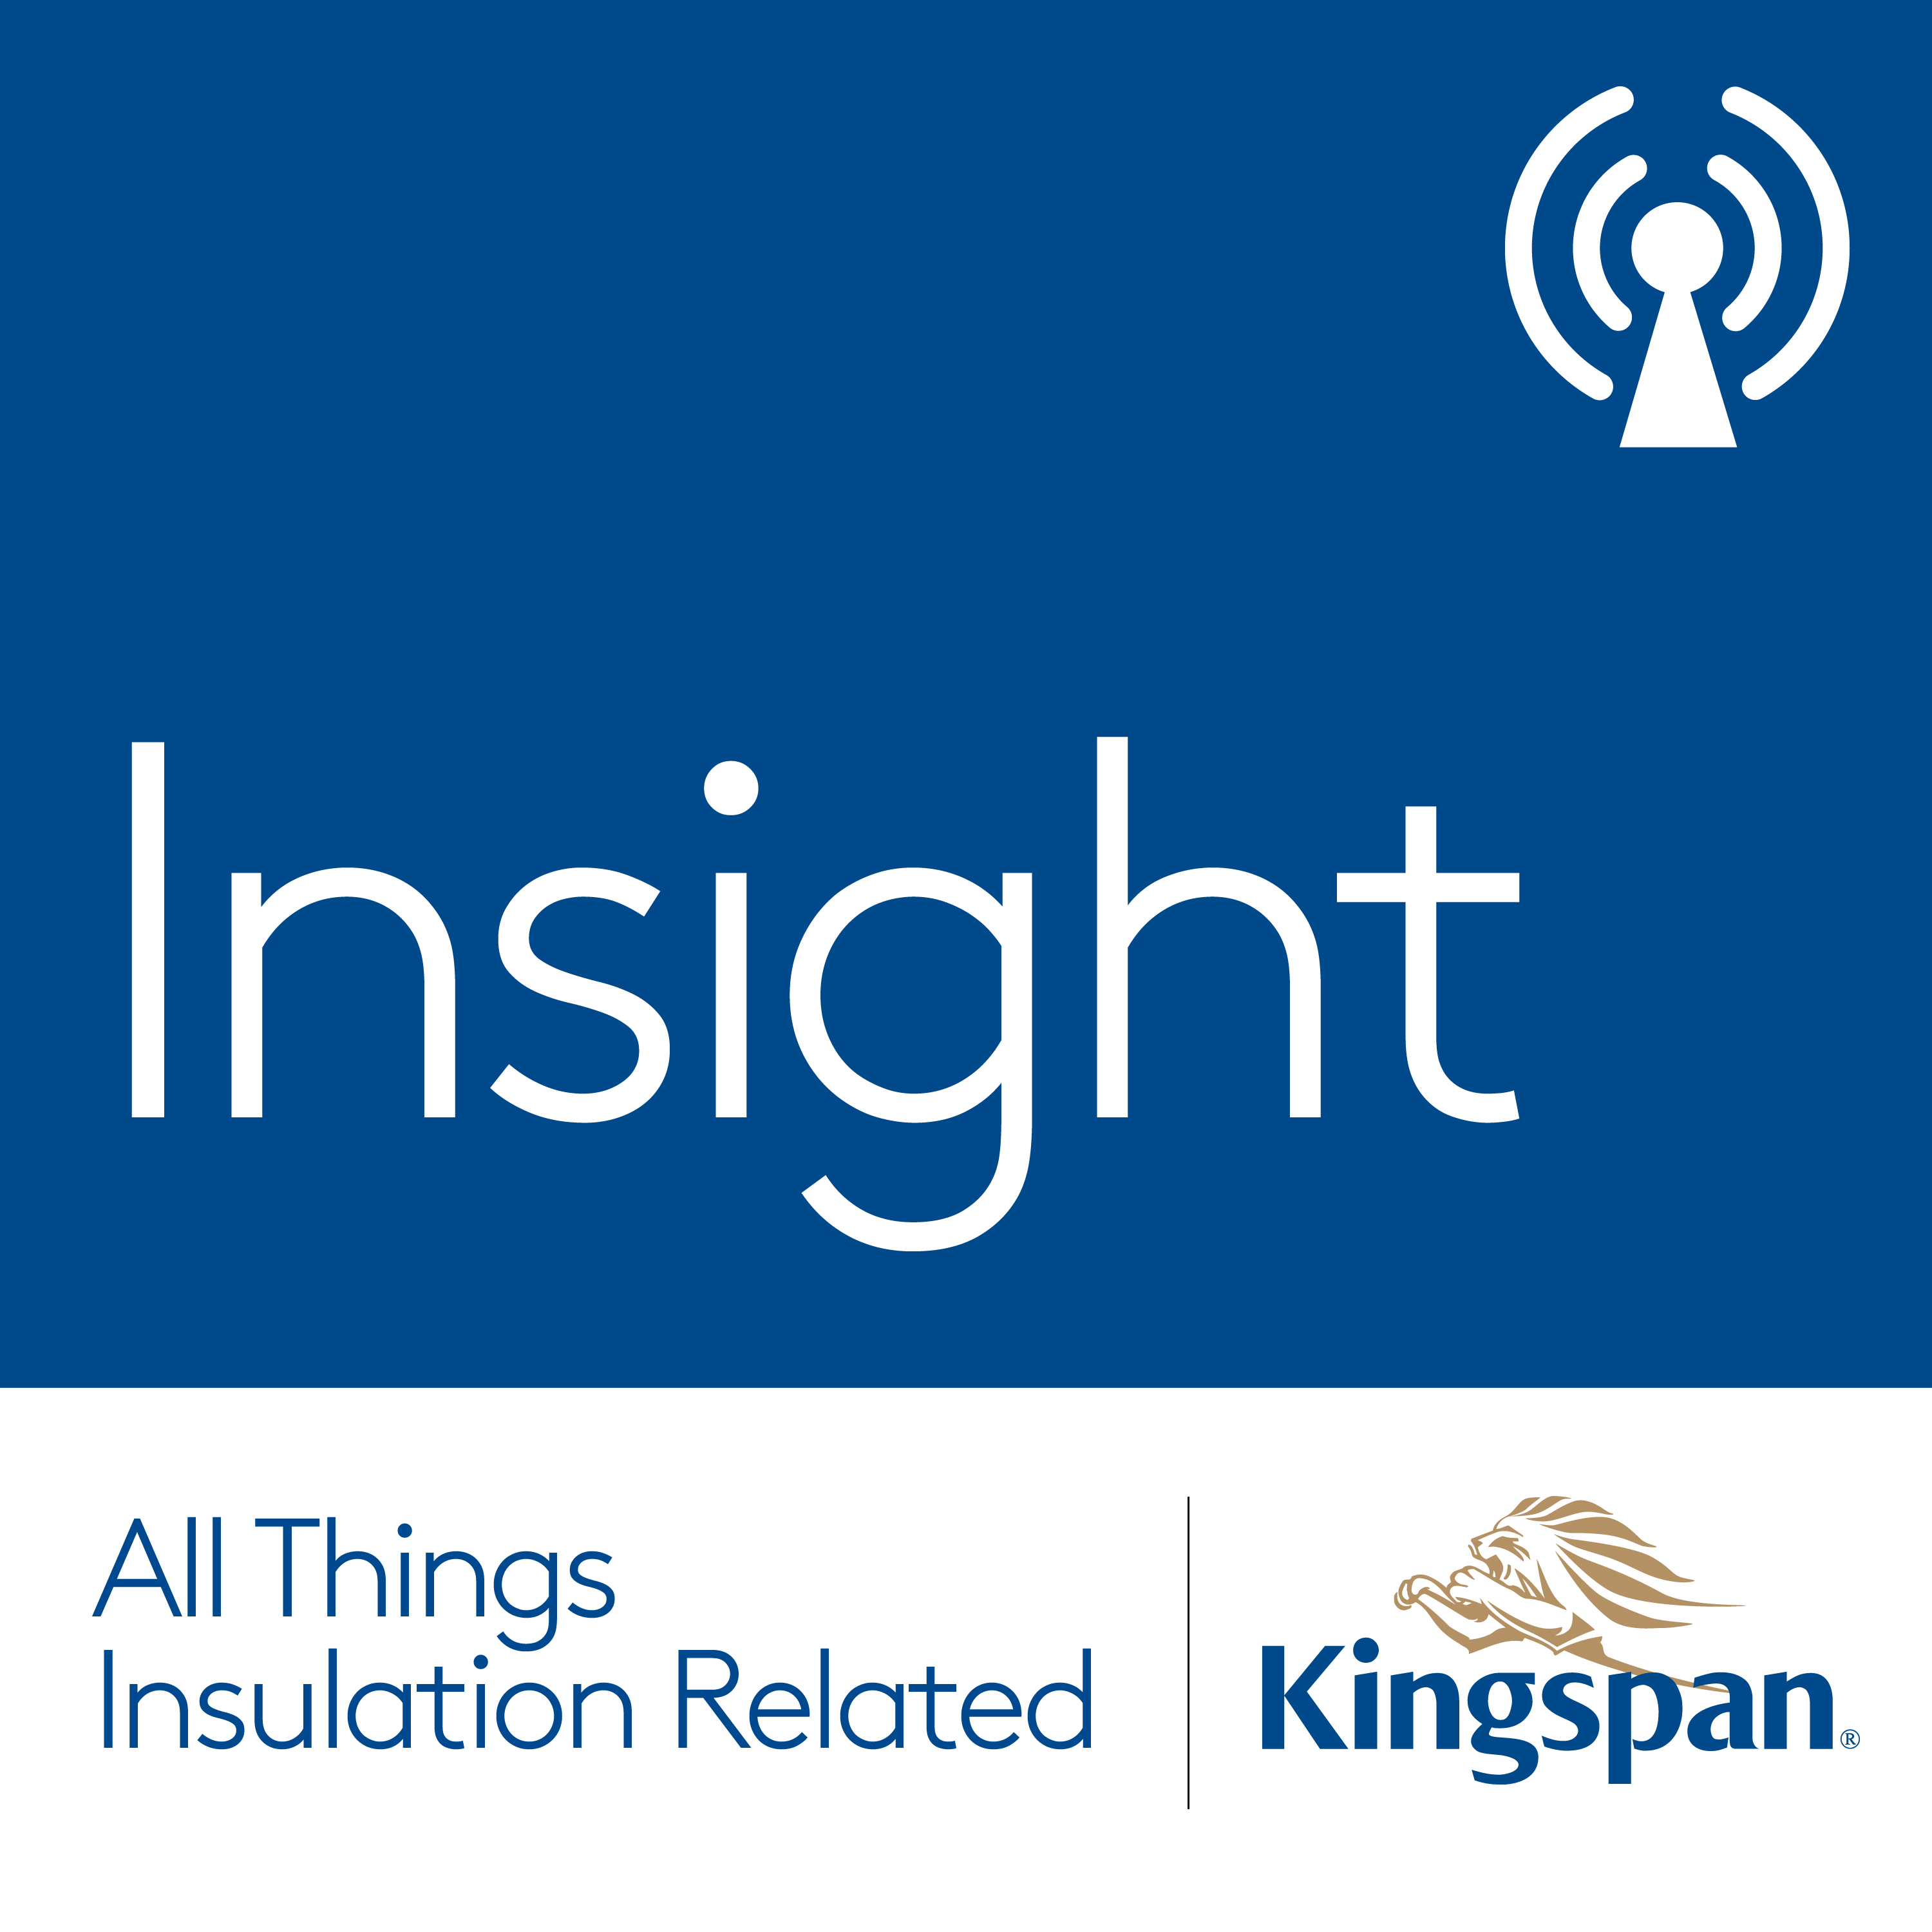 Kingspan Insulation Net Zero Podcast